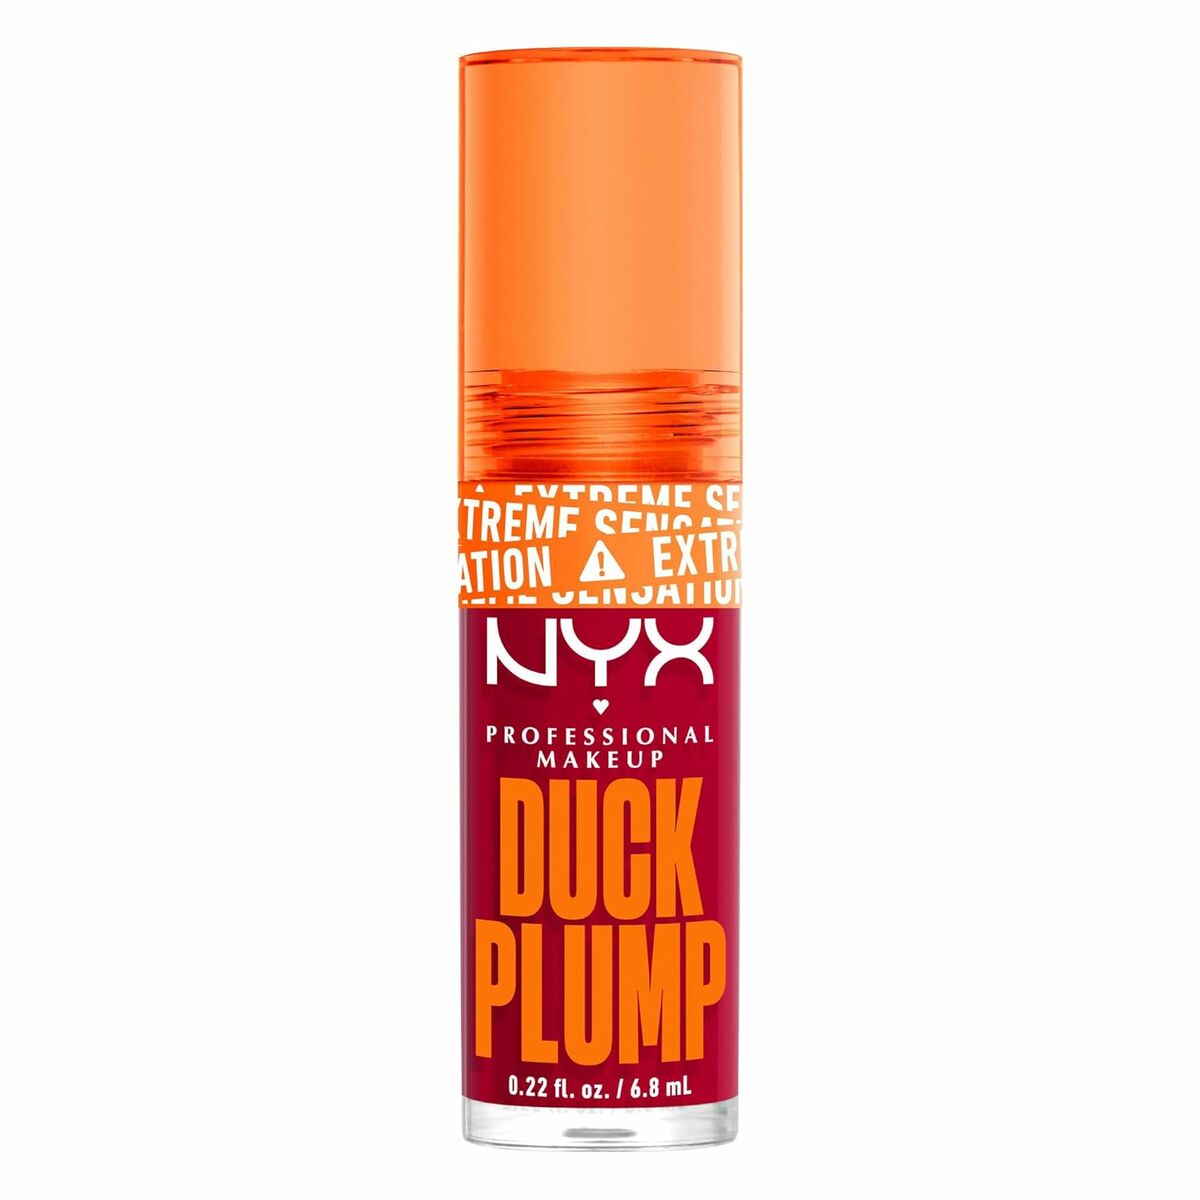 Lippgloss NYX Duck Plump Hall of flame 6,8 ml - CA International 